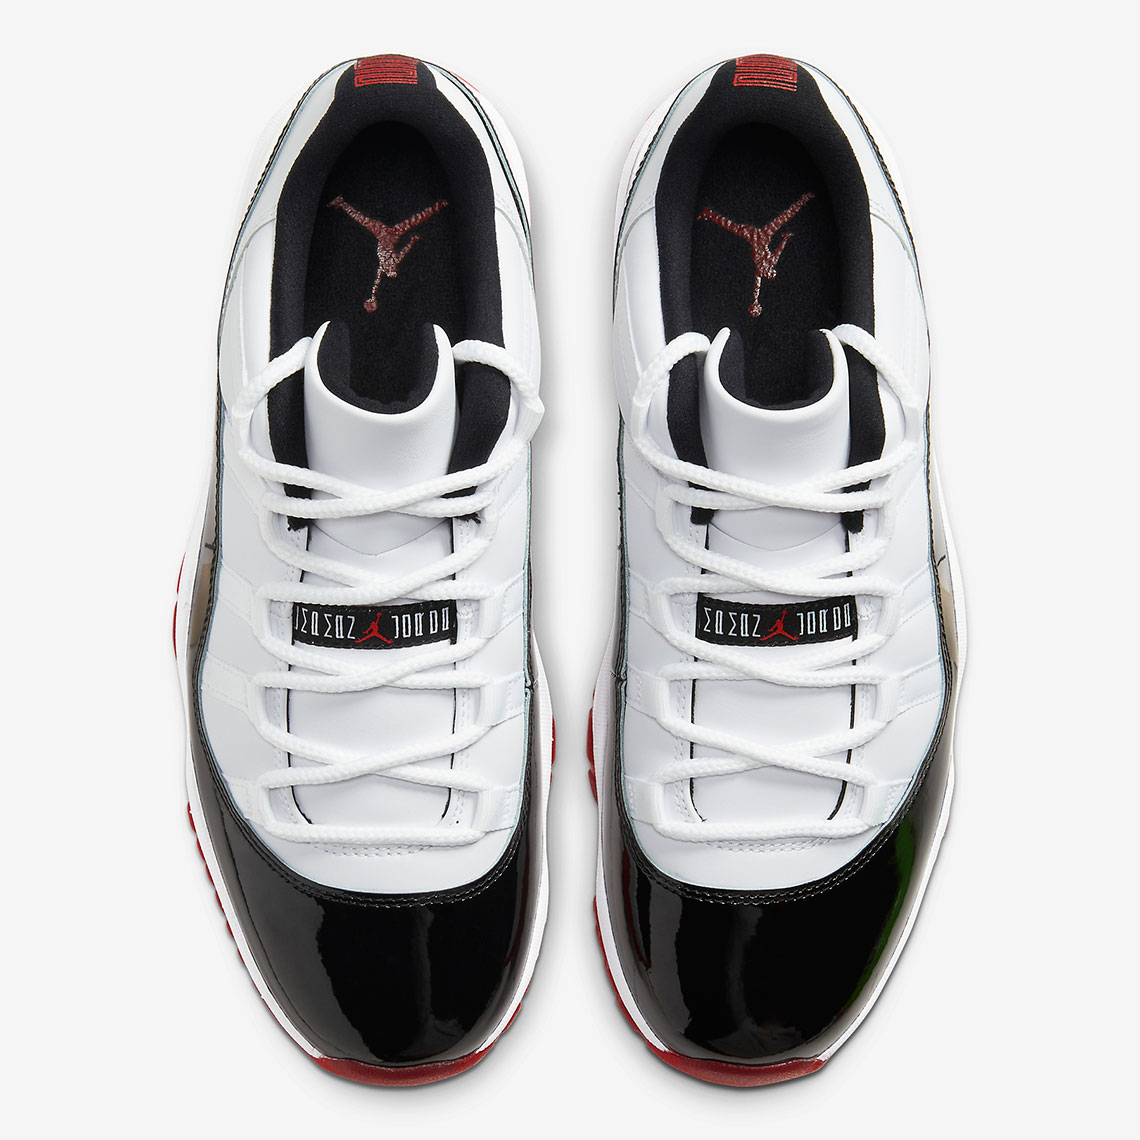 Jordan Brand Reveals Air Jordan 1 Low Vintage Grey Av2187 160 4